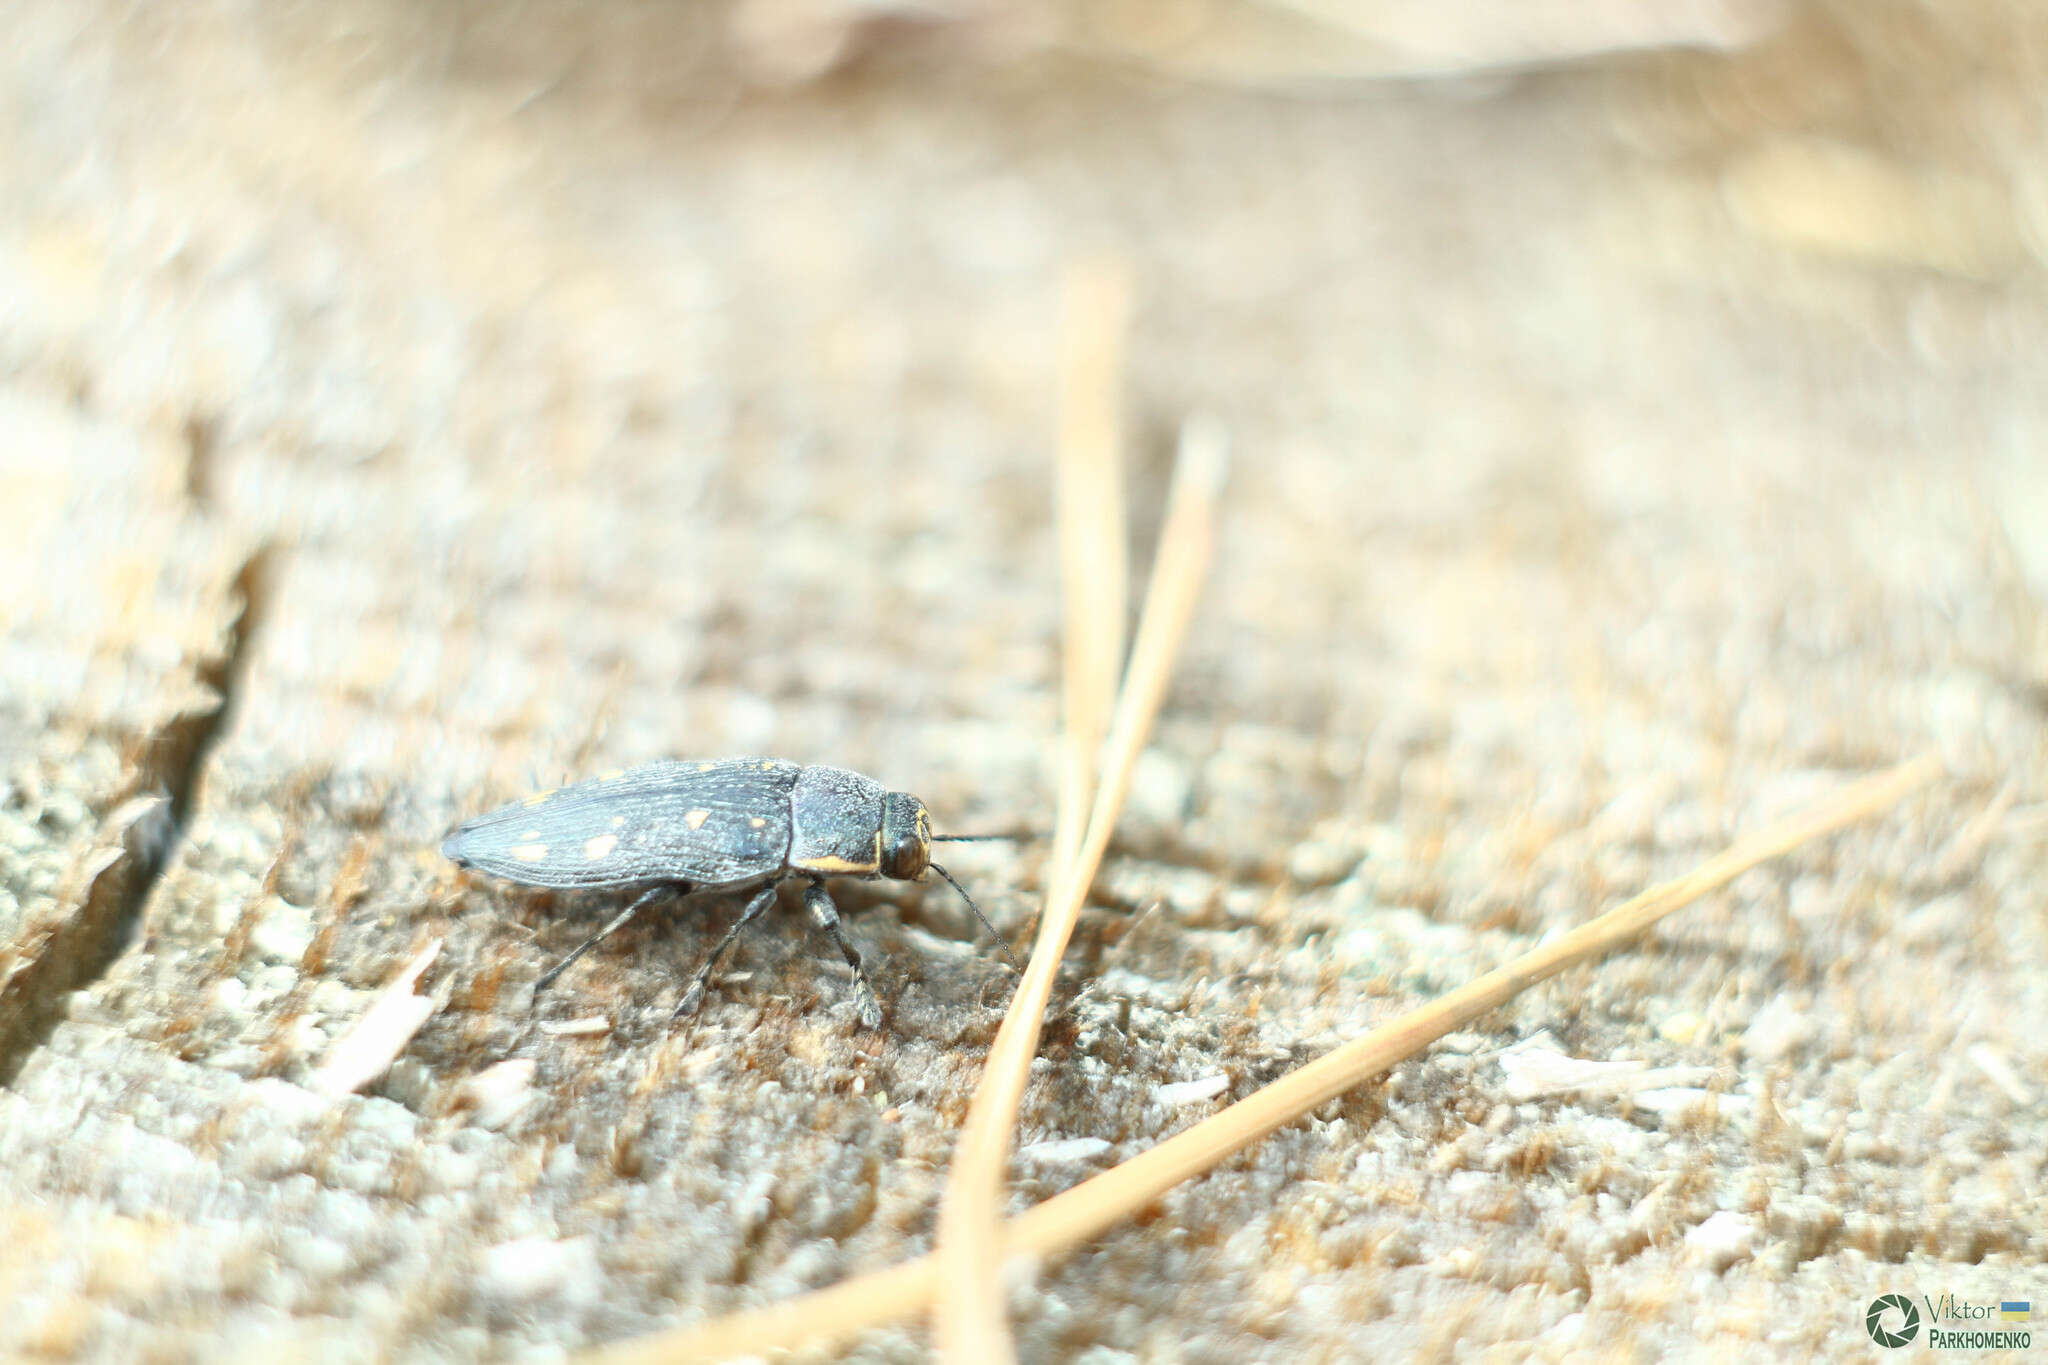 Image of Painted Jewel Beetle